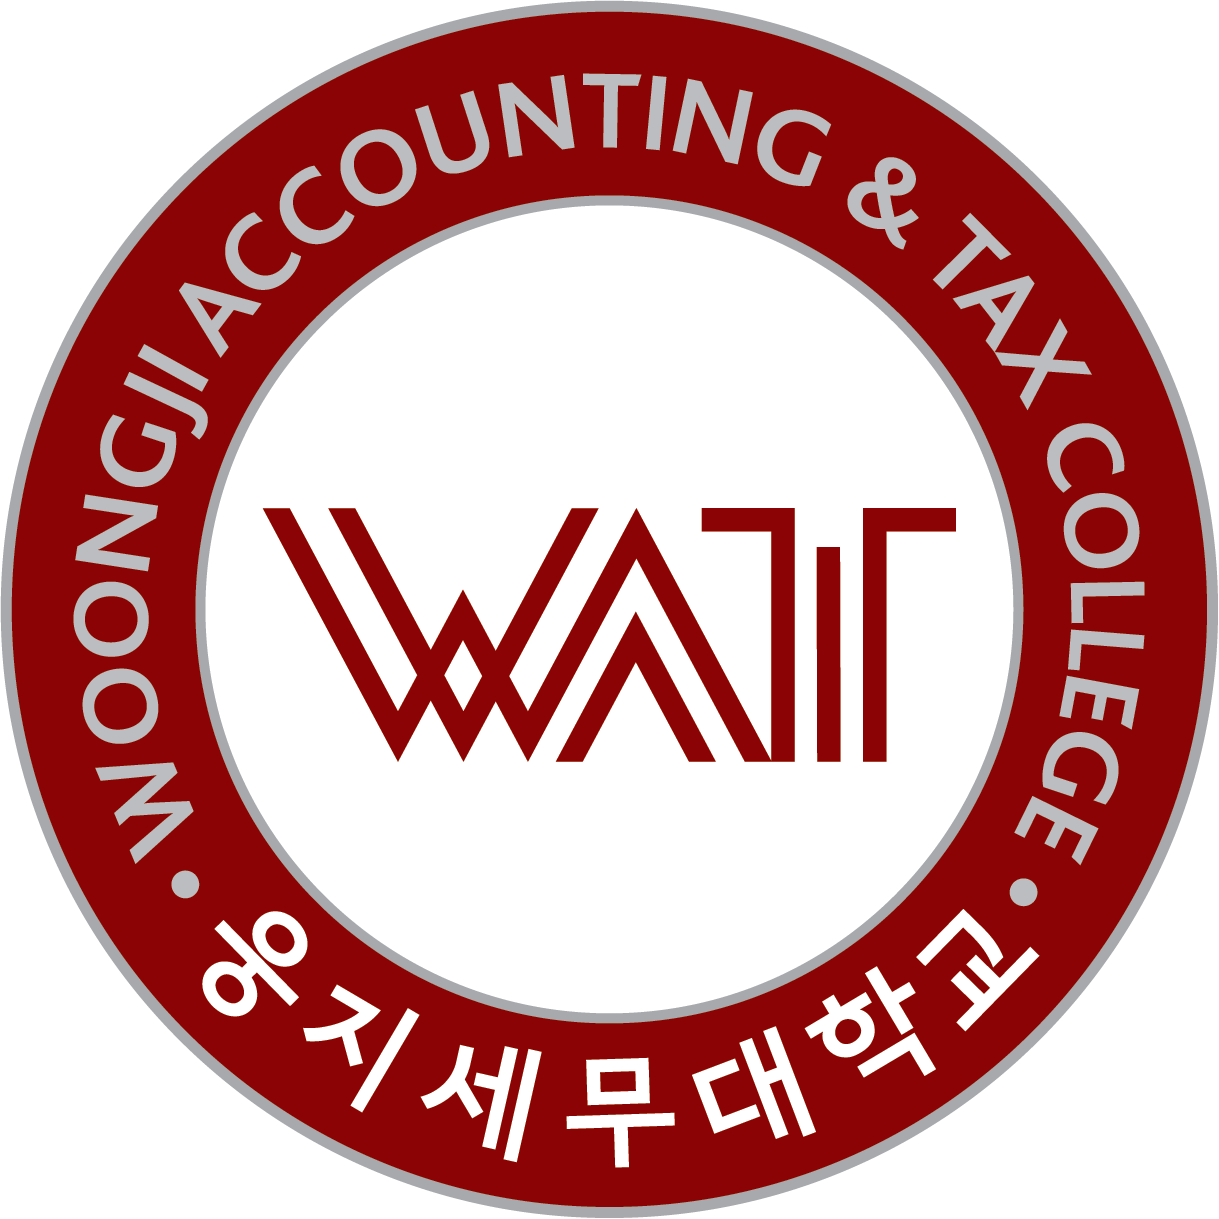 Woongji Accounting & Tax College logo